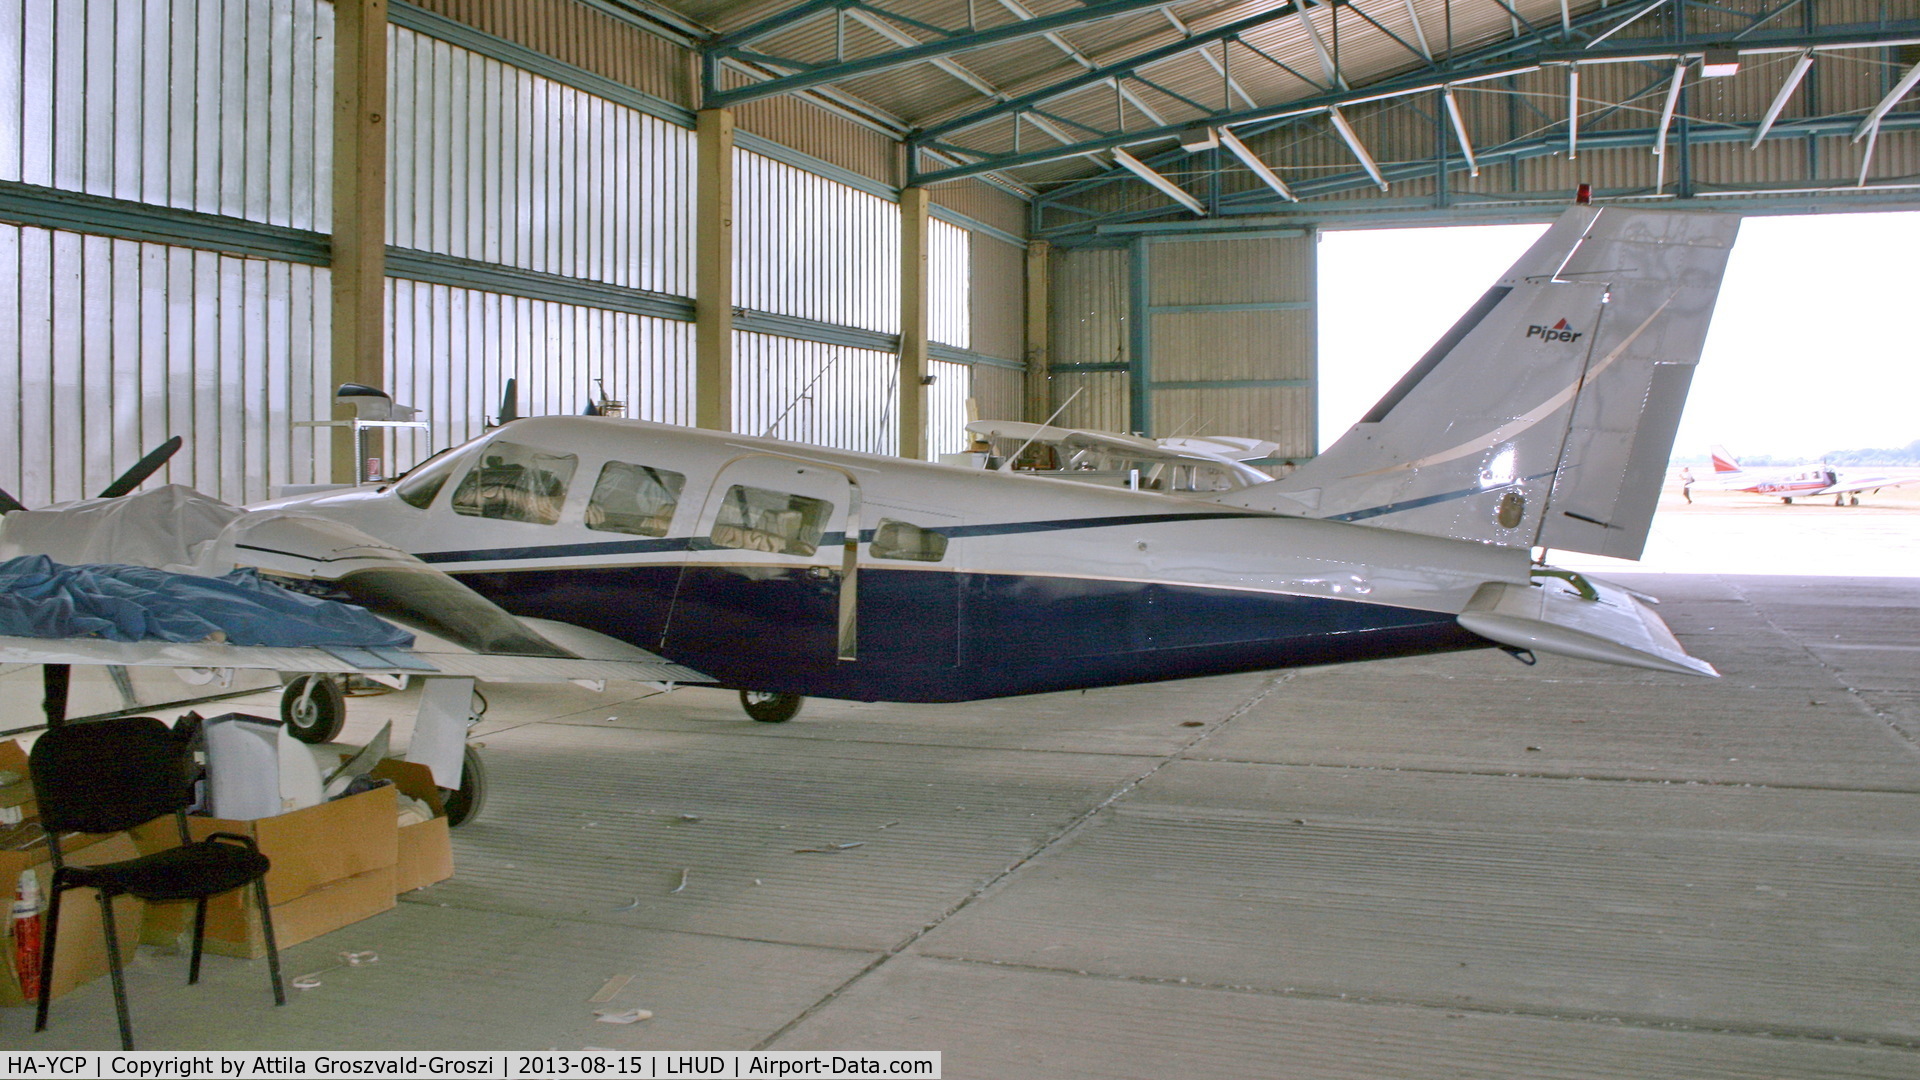 HA-YCP, 1991 Piper PA-34-220T C/N 3448015, LHUD - Szeged Airport, Hungary